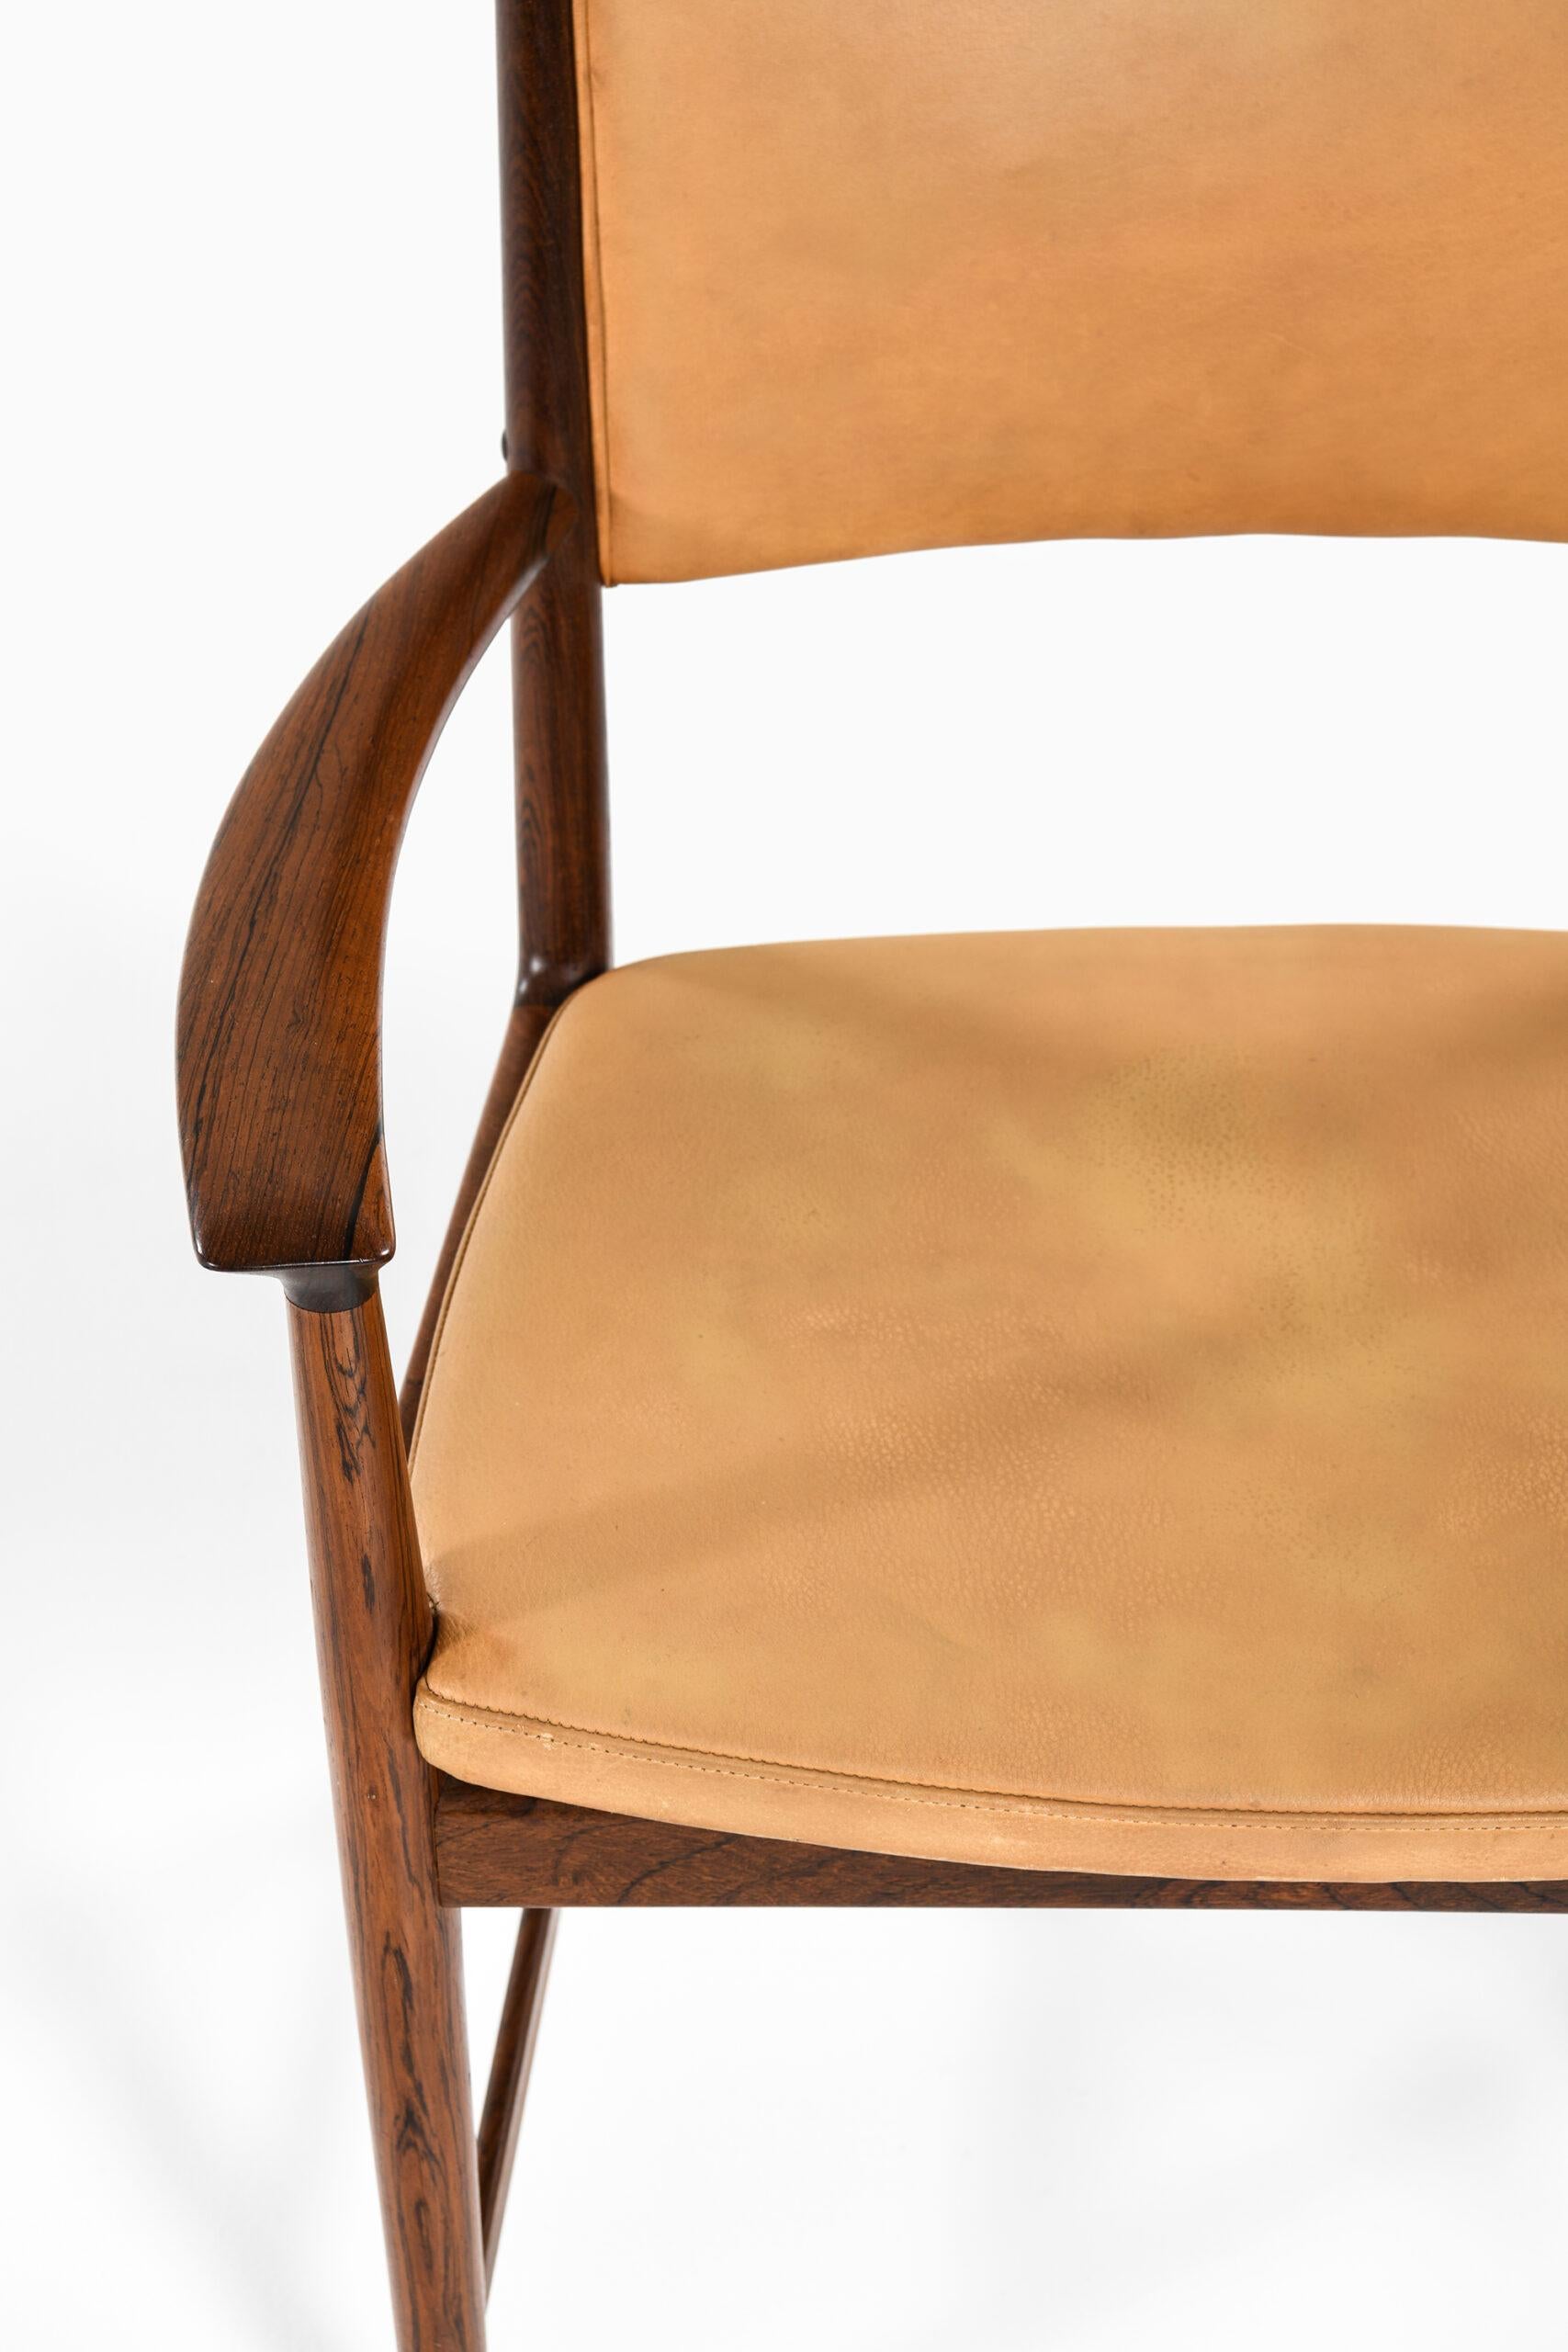 Rare pair of armchairs designed by Kai Lyngfeldt Larsen. Produced by Søren Willadsen Møbelfabrik in Denmark.
Price listed is / item.